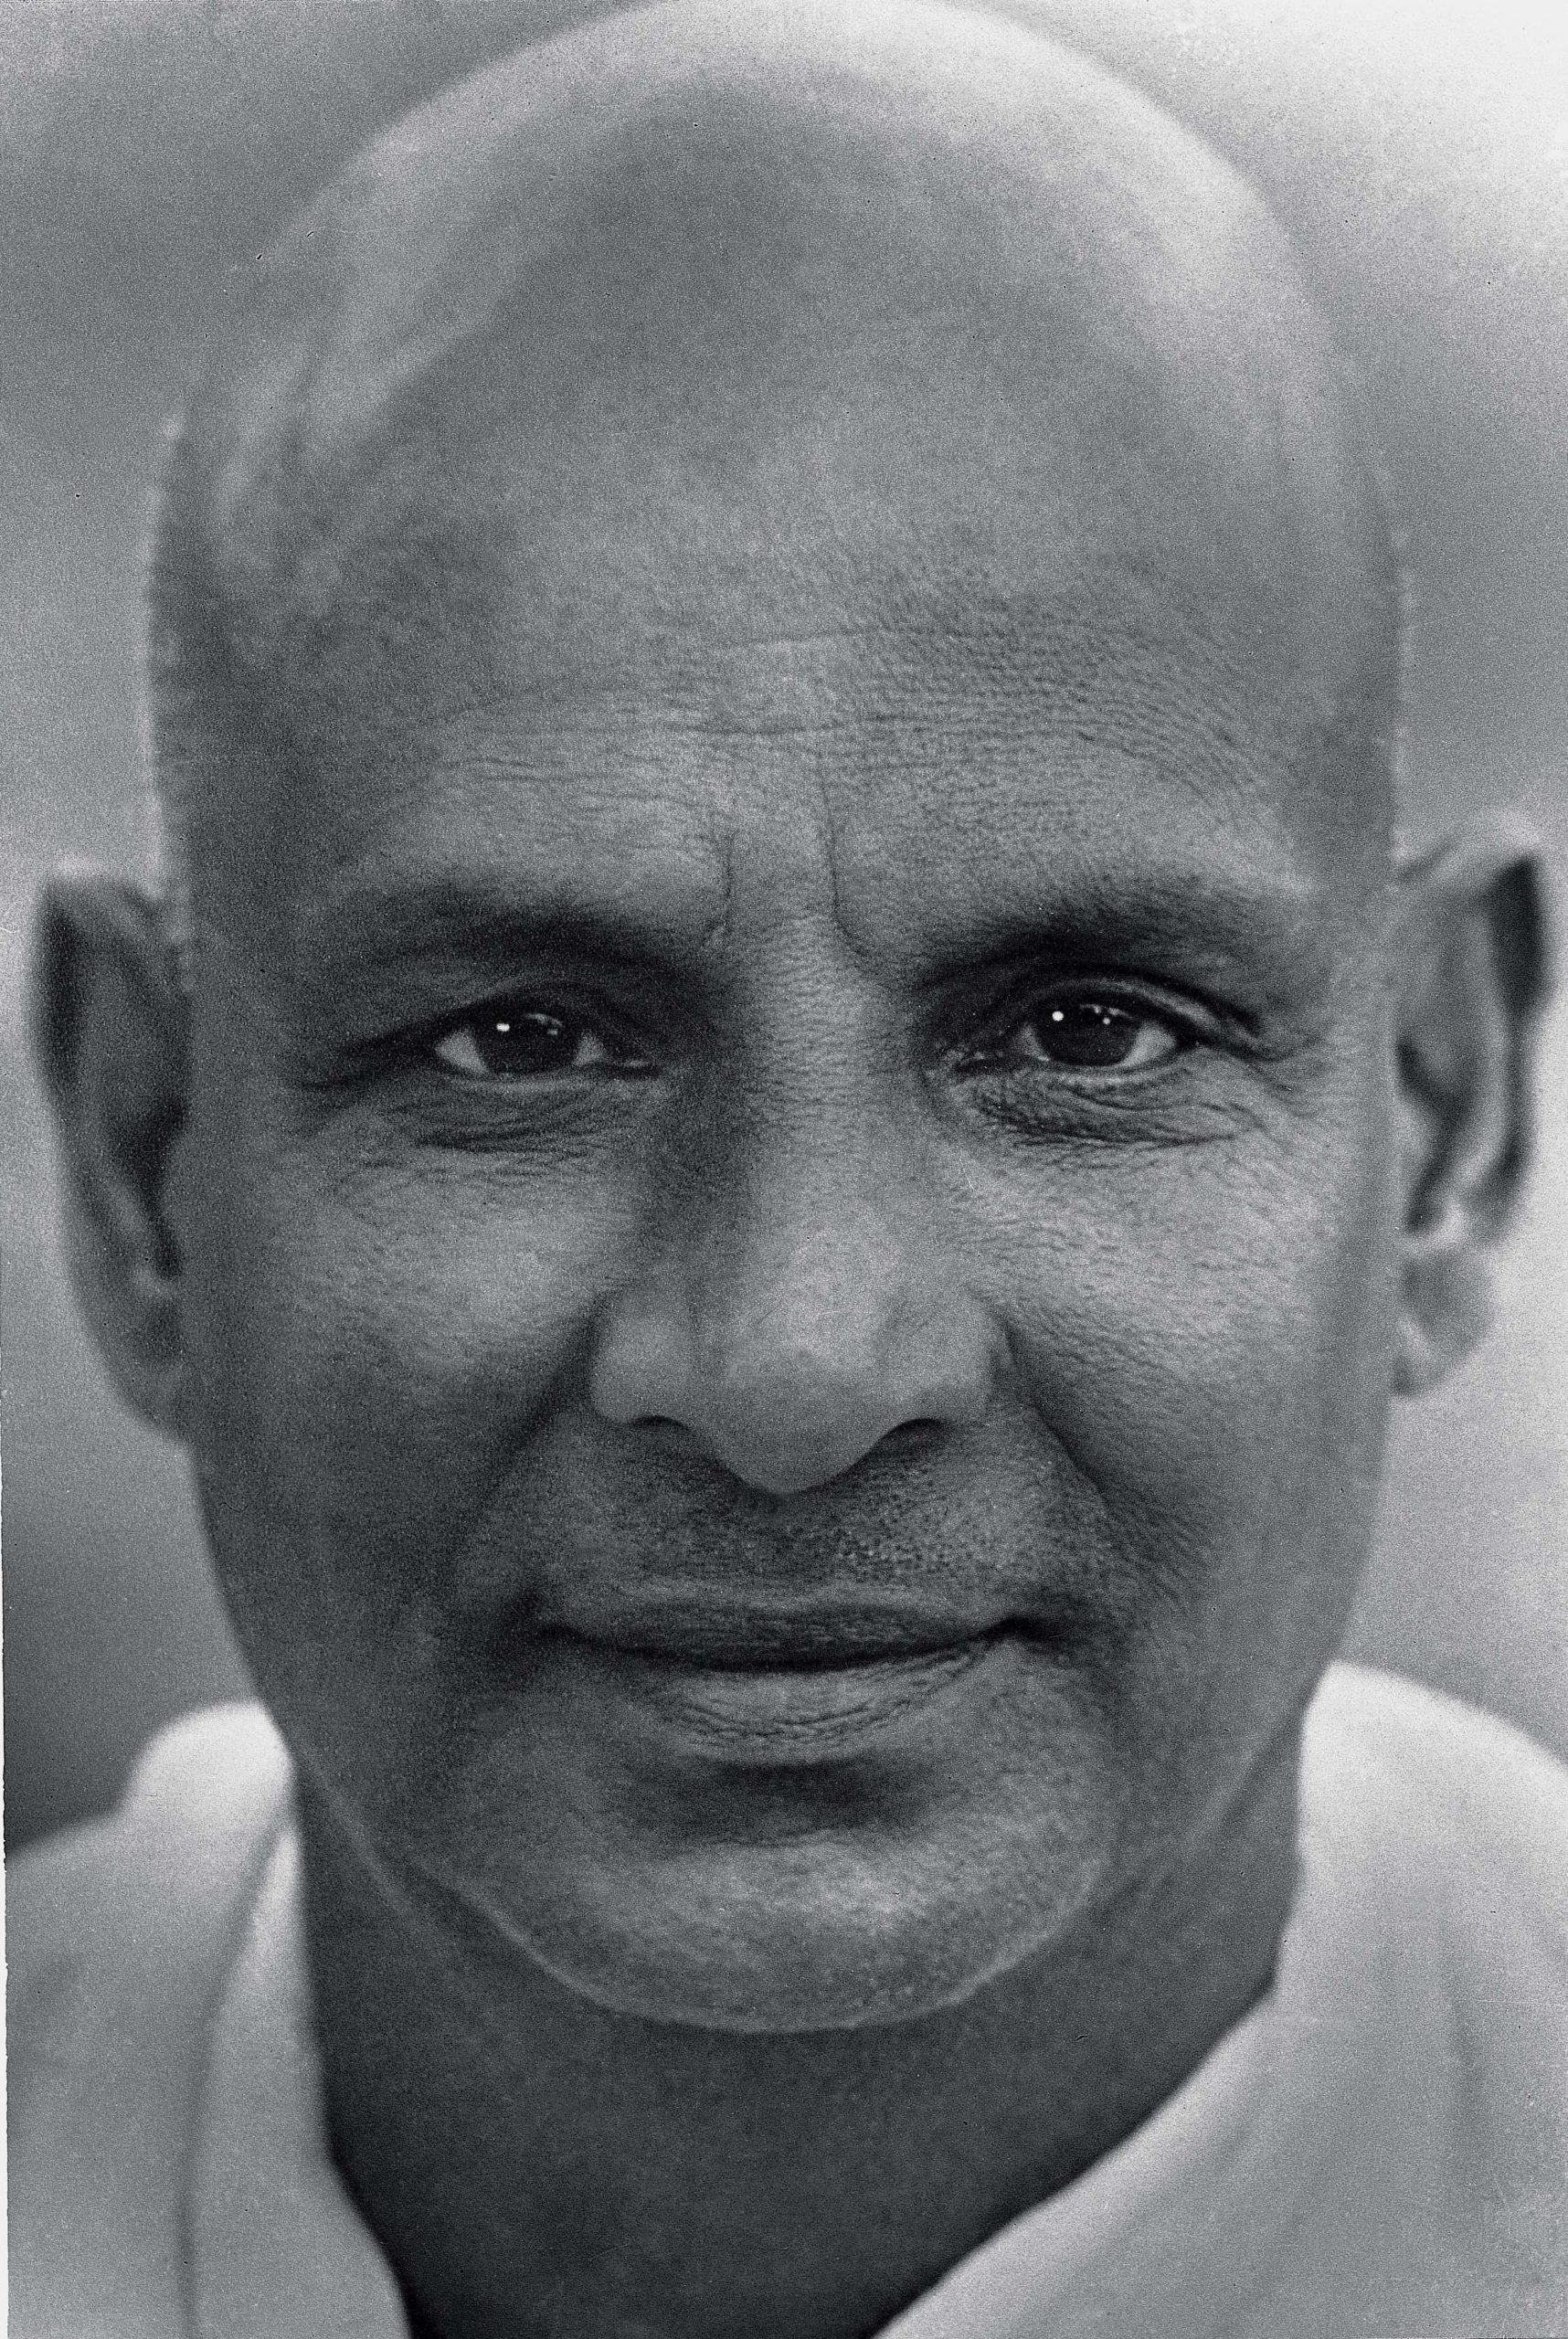 Swami Sivananda